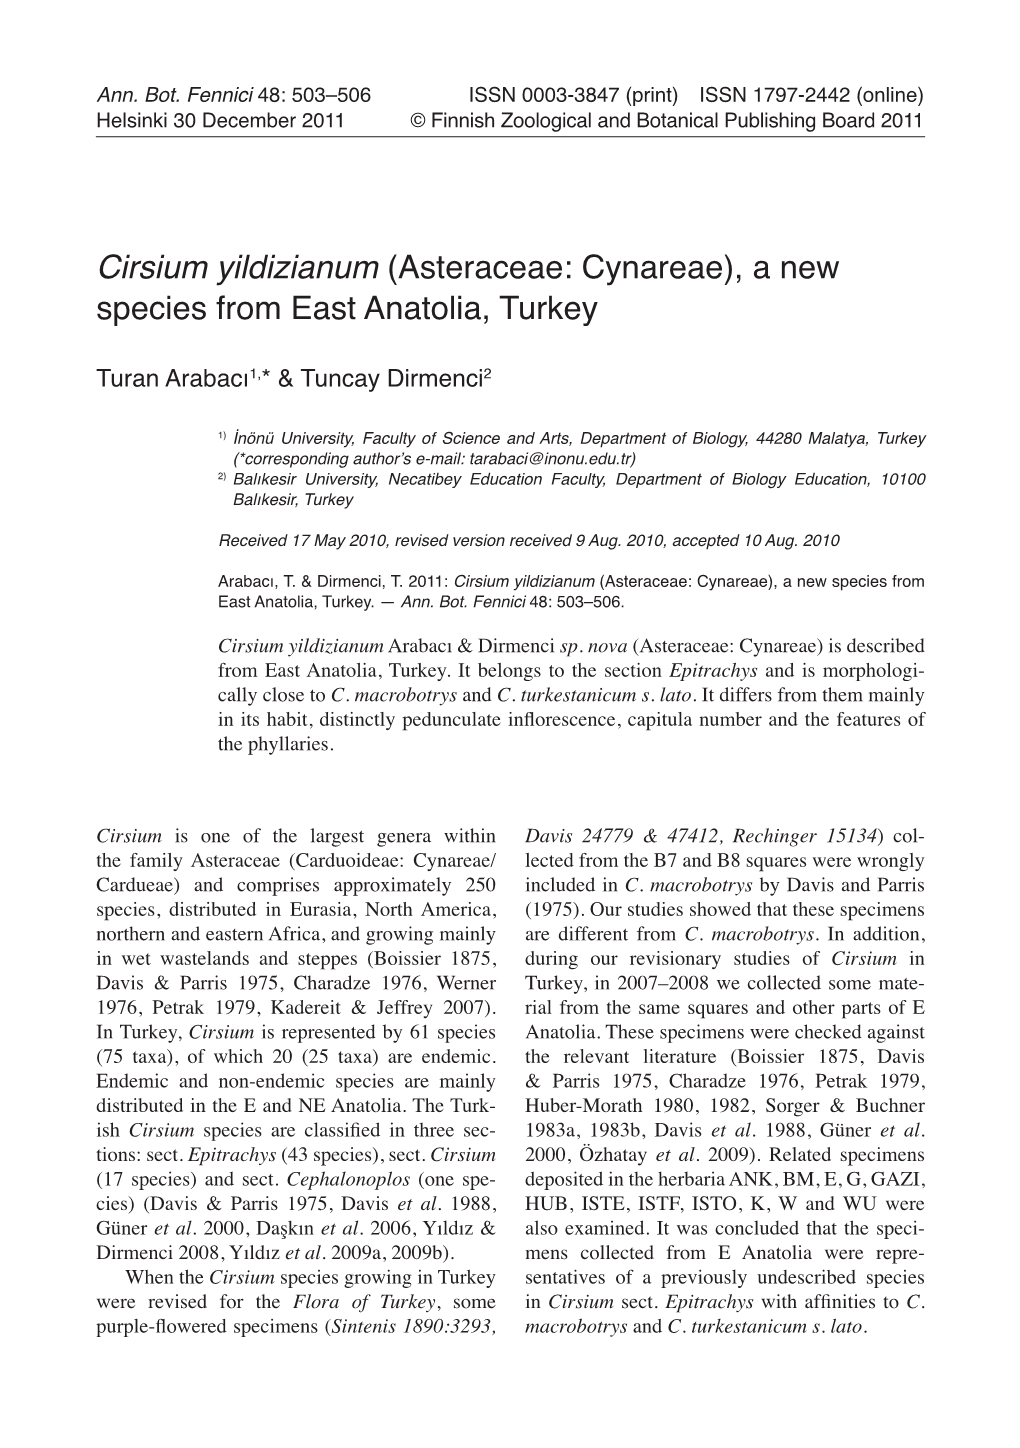 Cirsium Yildizianum (Asteraceae: Cynareae), a New Species from East Anatolia, Turkey